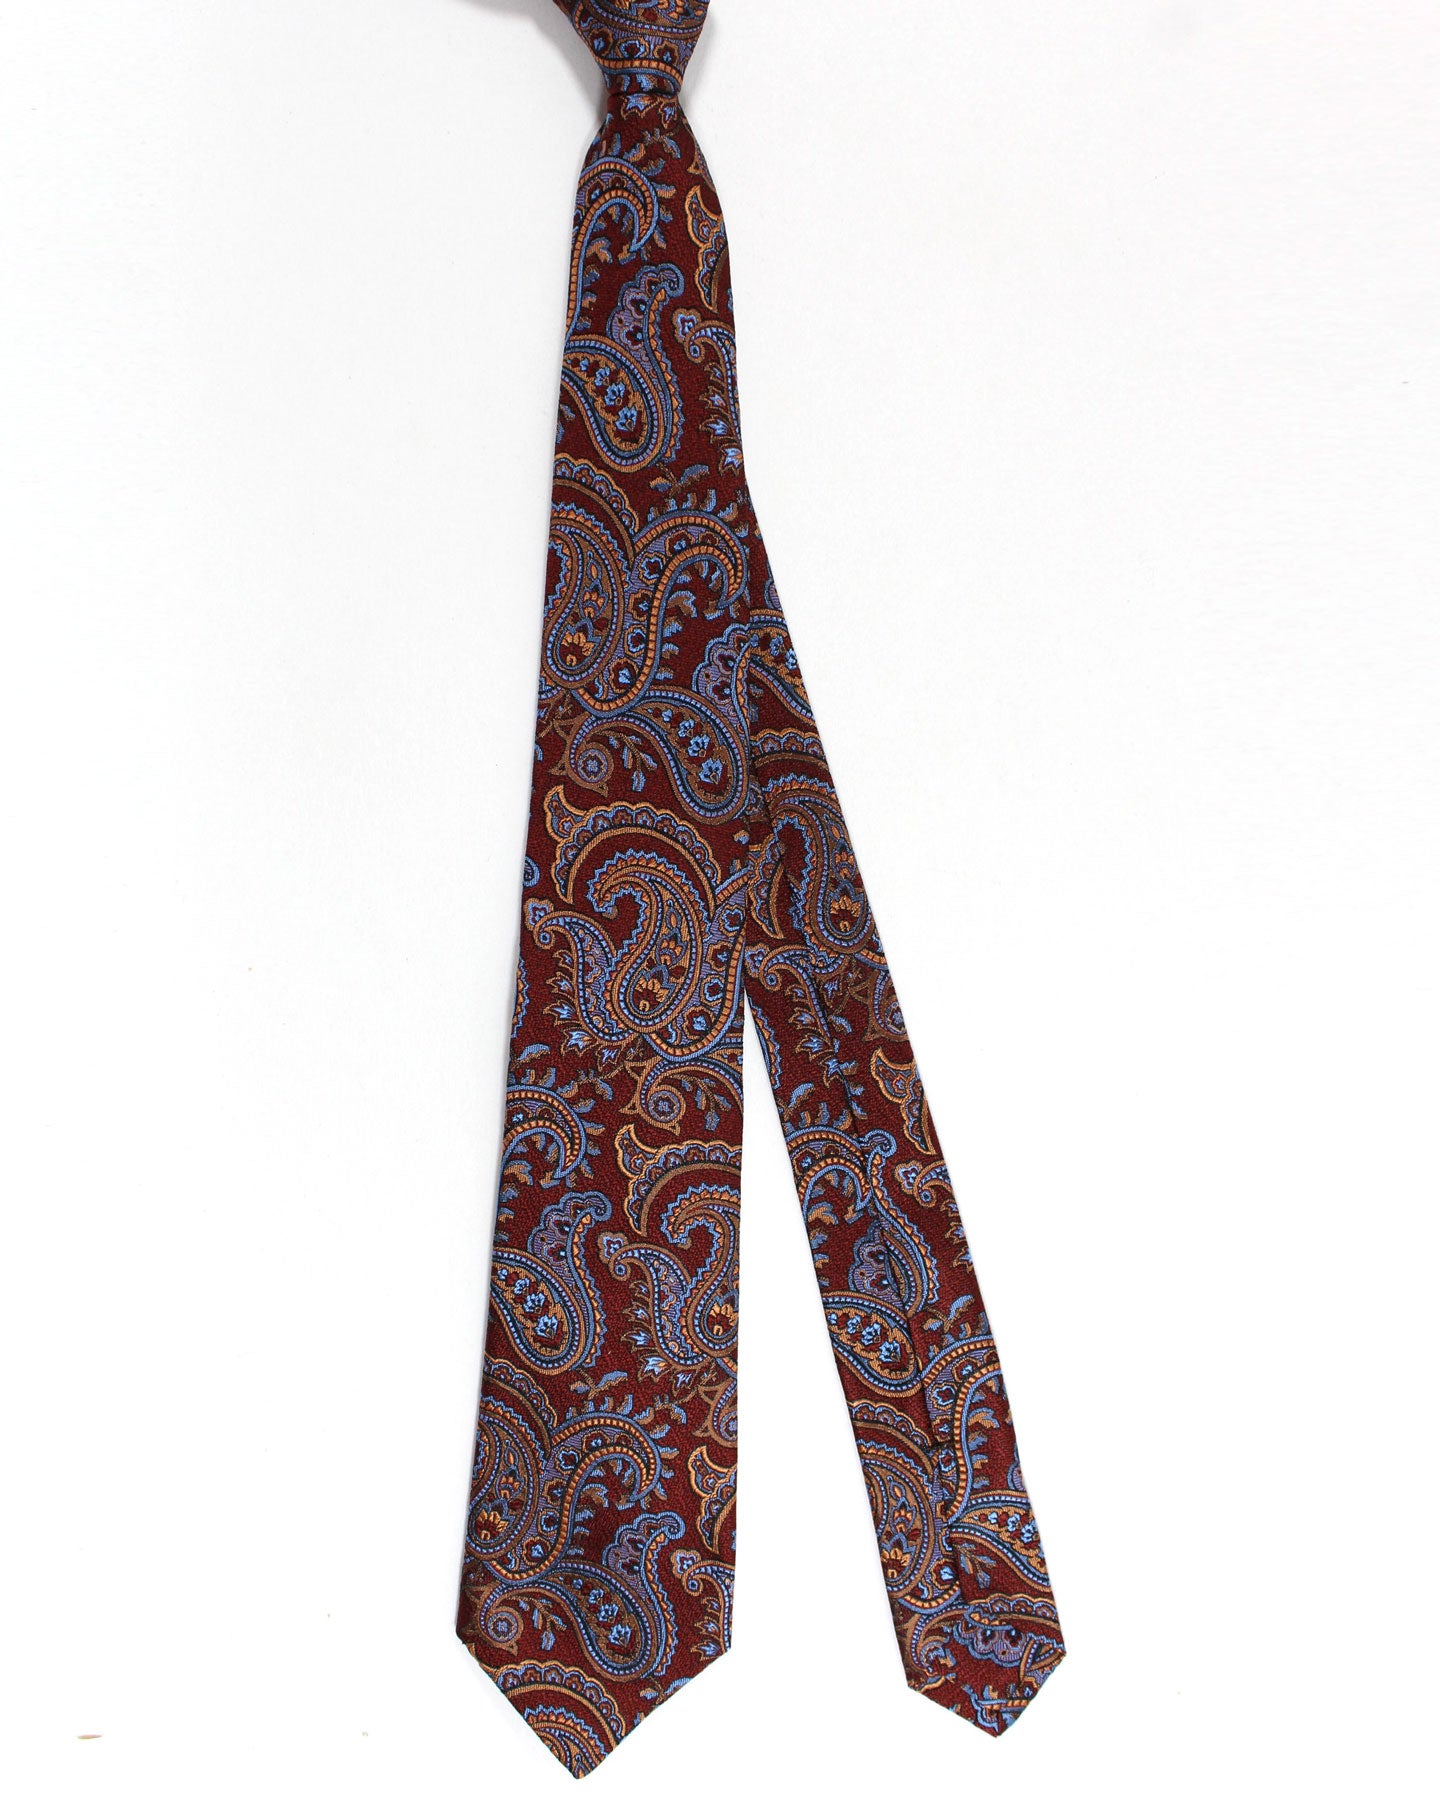 Sartorio Napoli Silk Tie Burgundy Blue Brown Paisley Design